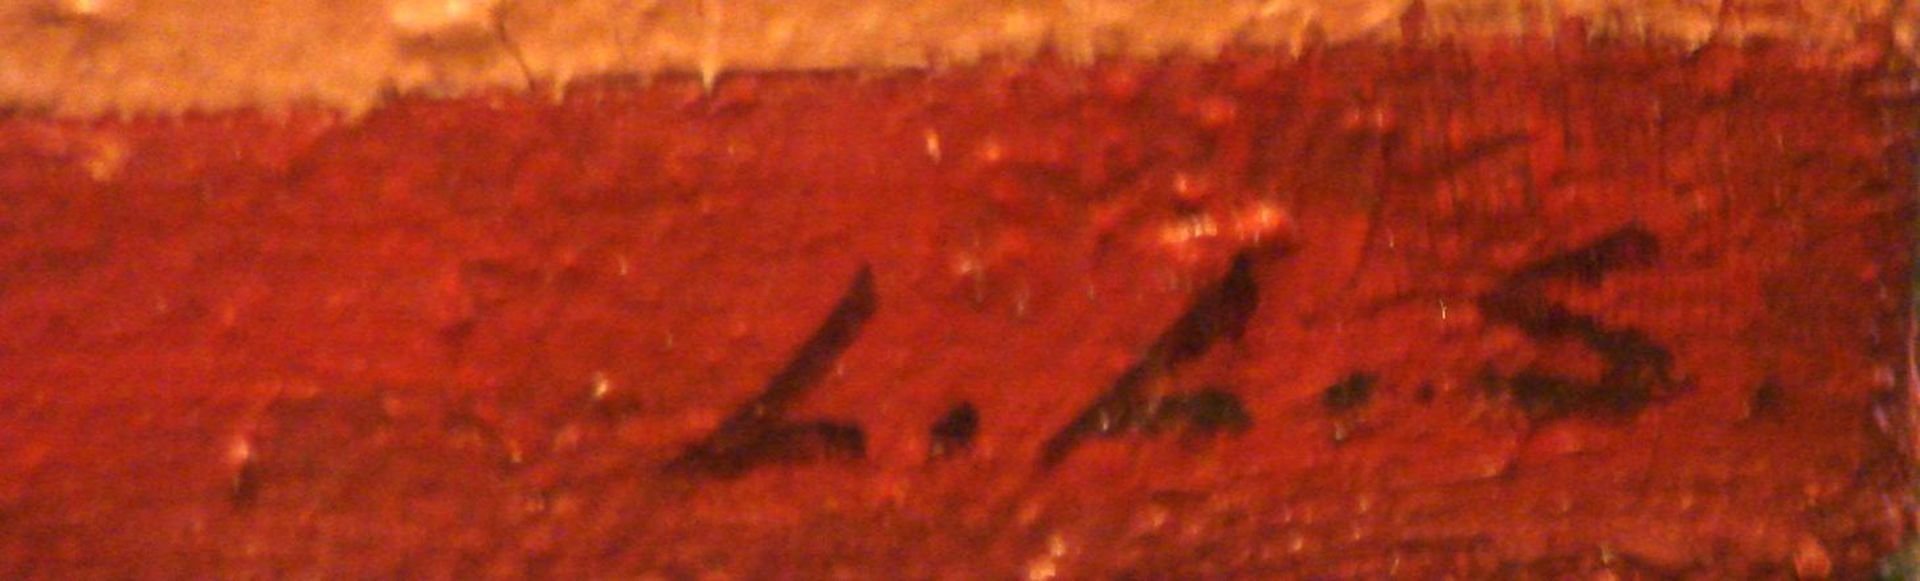 LORE-LINA SCHMIDT-ROßNAGEL (1923-2011), "Figuration I", orangefarbener-roter Kreis auf hellem F ... - Bild 2 aus 2